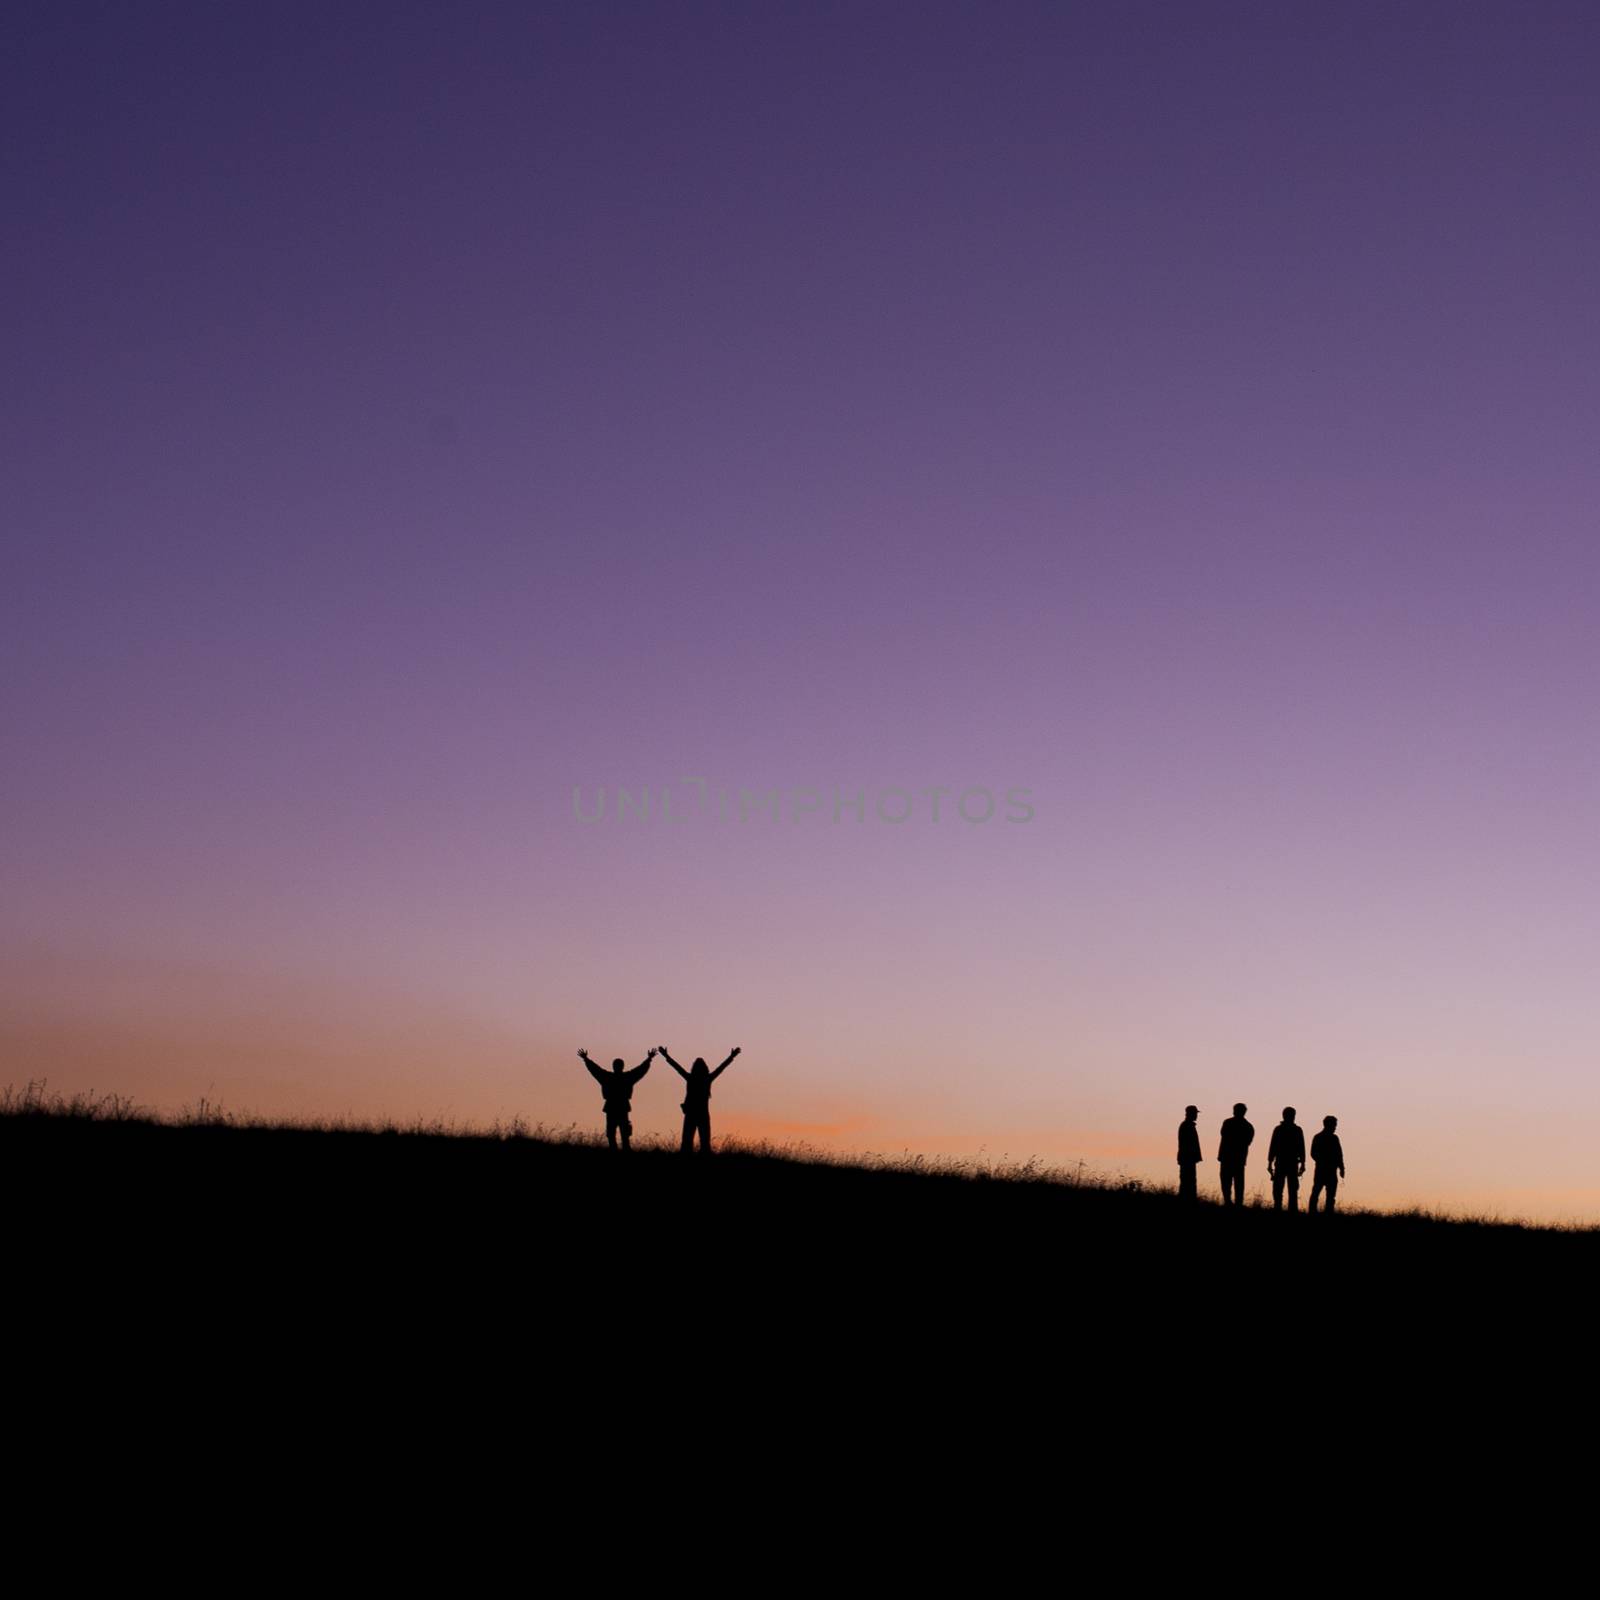 six children jumping for joy on mountain silhouette sunset